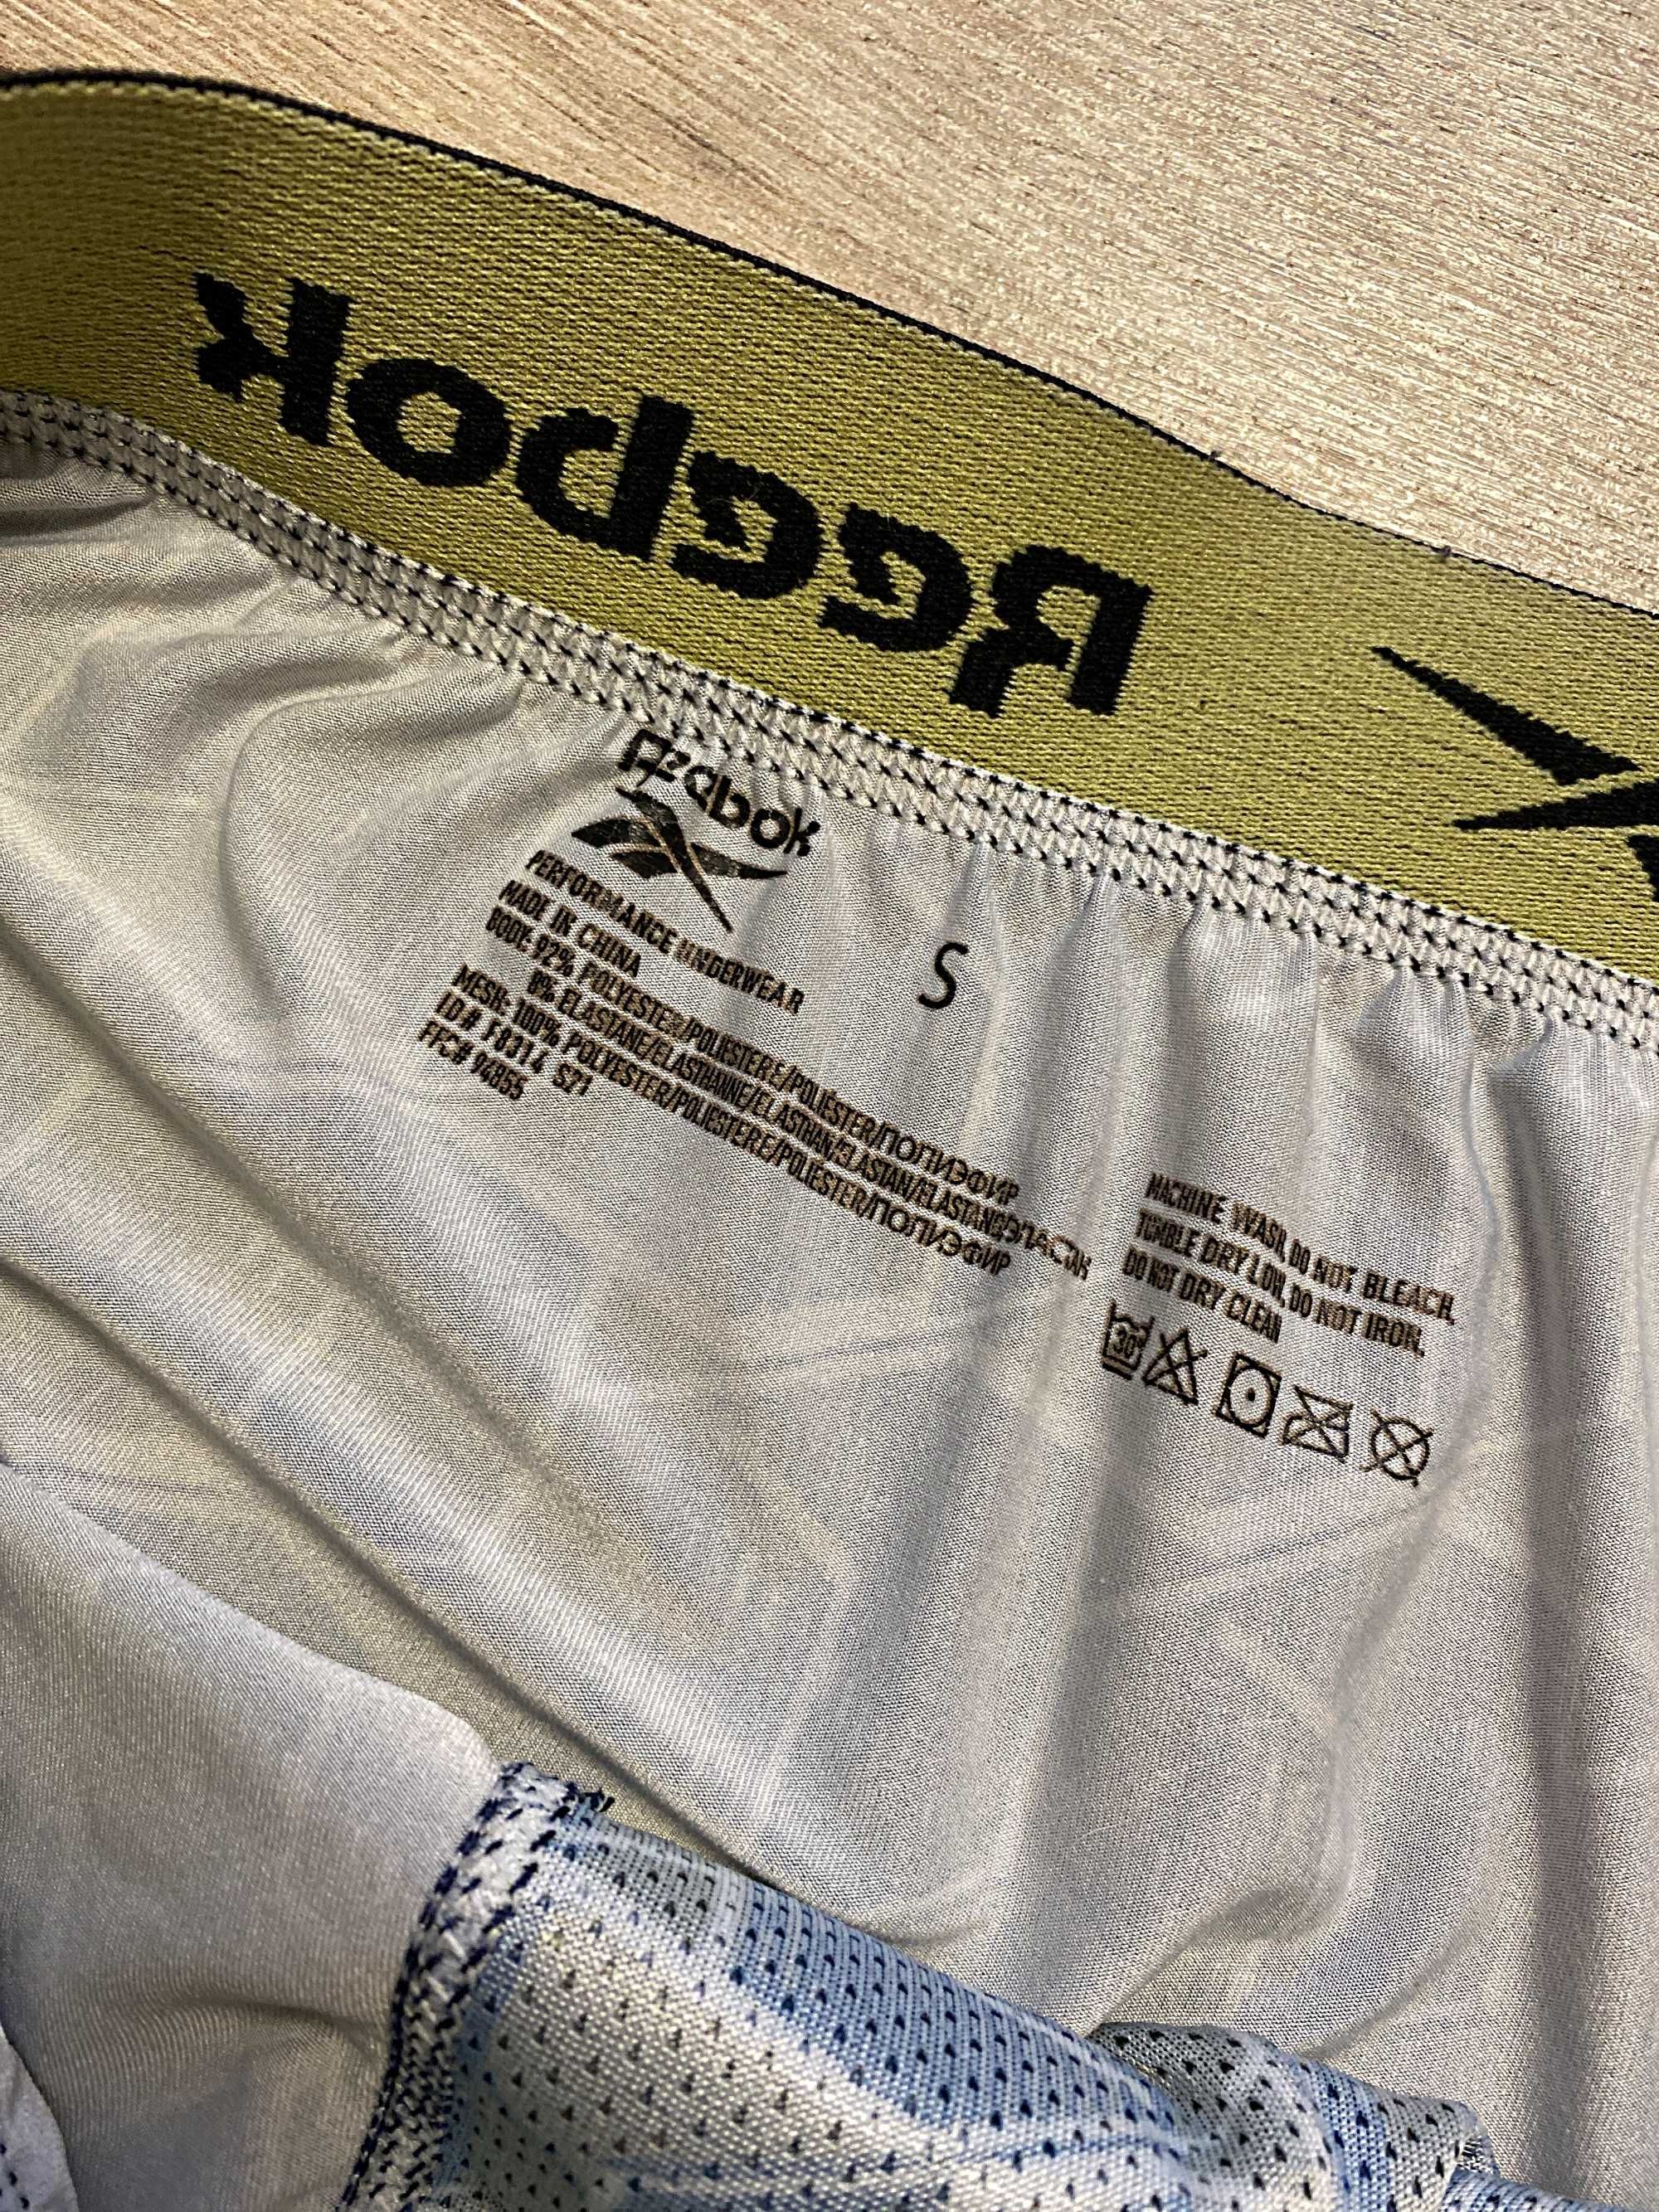 Компрессионные шорты боксеры Reebok